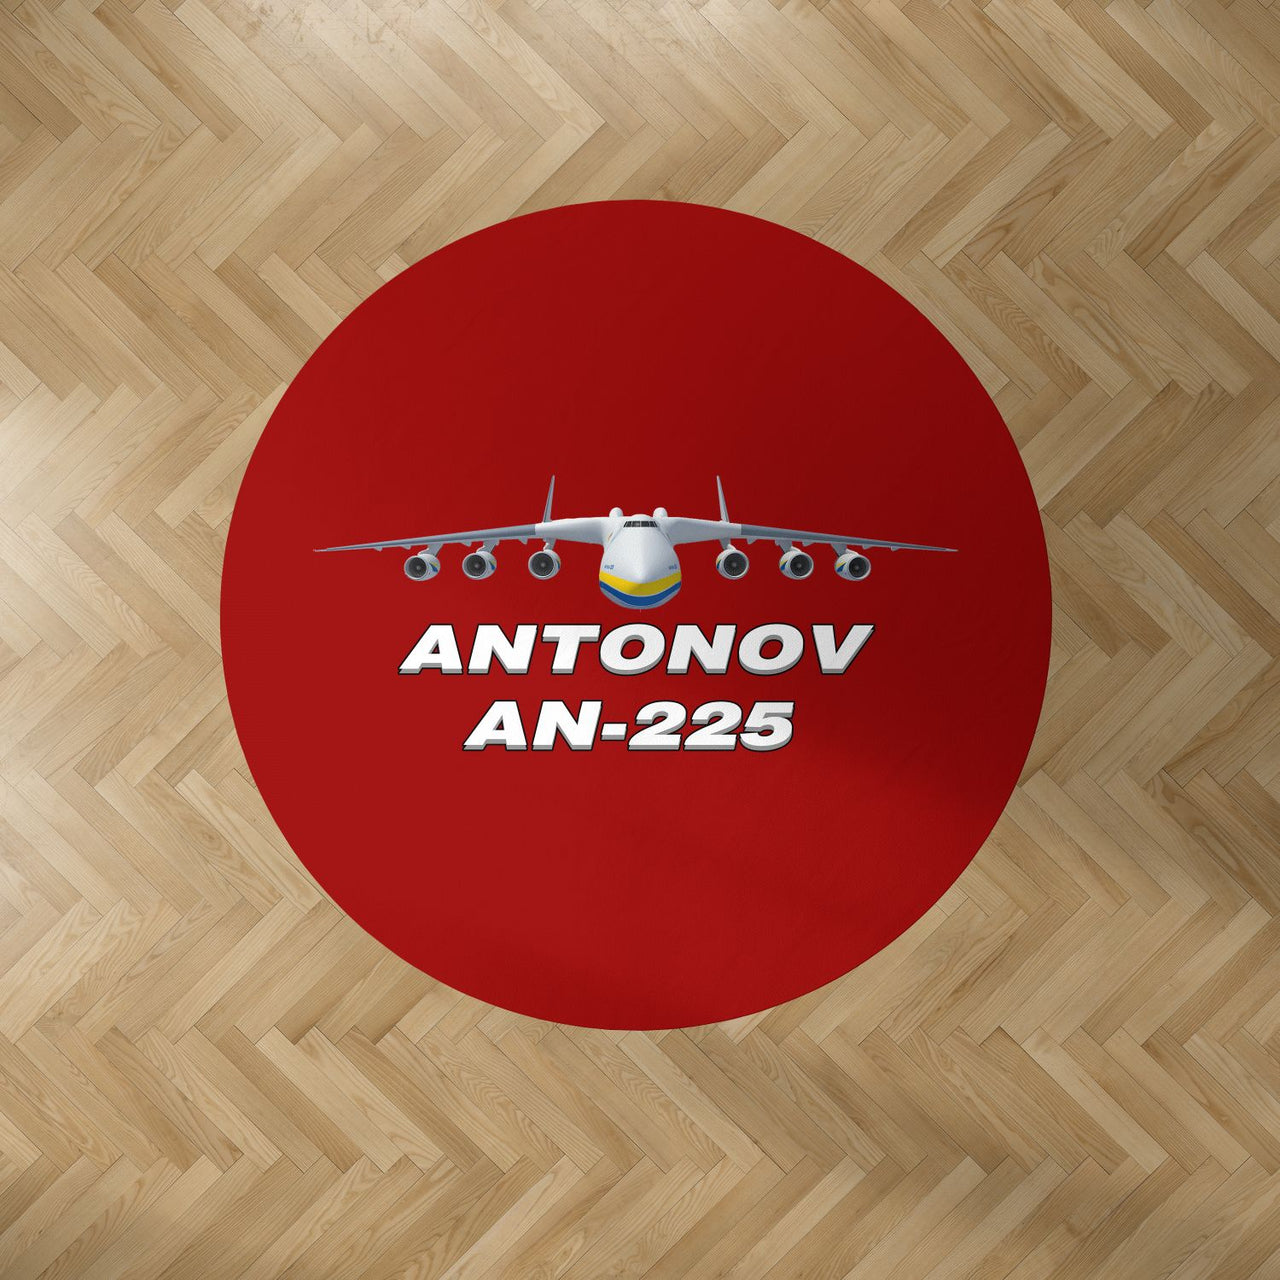 Antonov AN-225 (16) Designed Carpet & Floor Mats (Round)